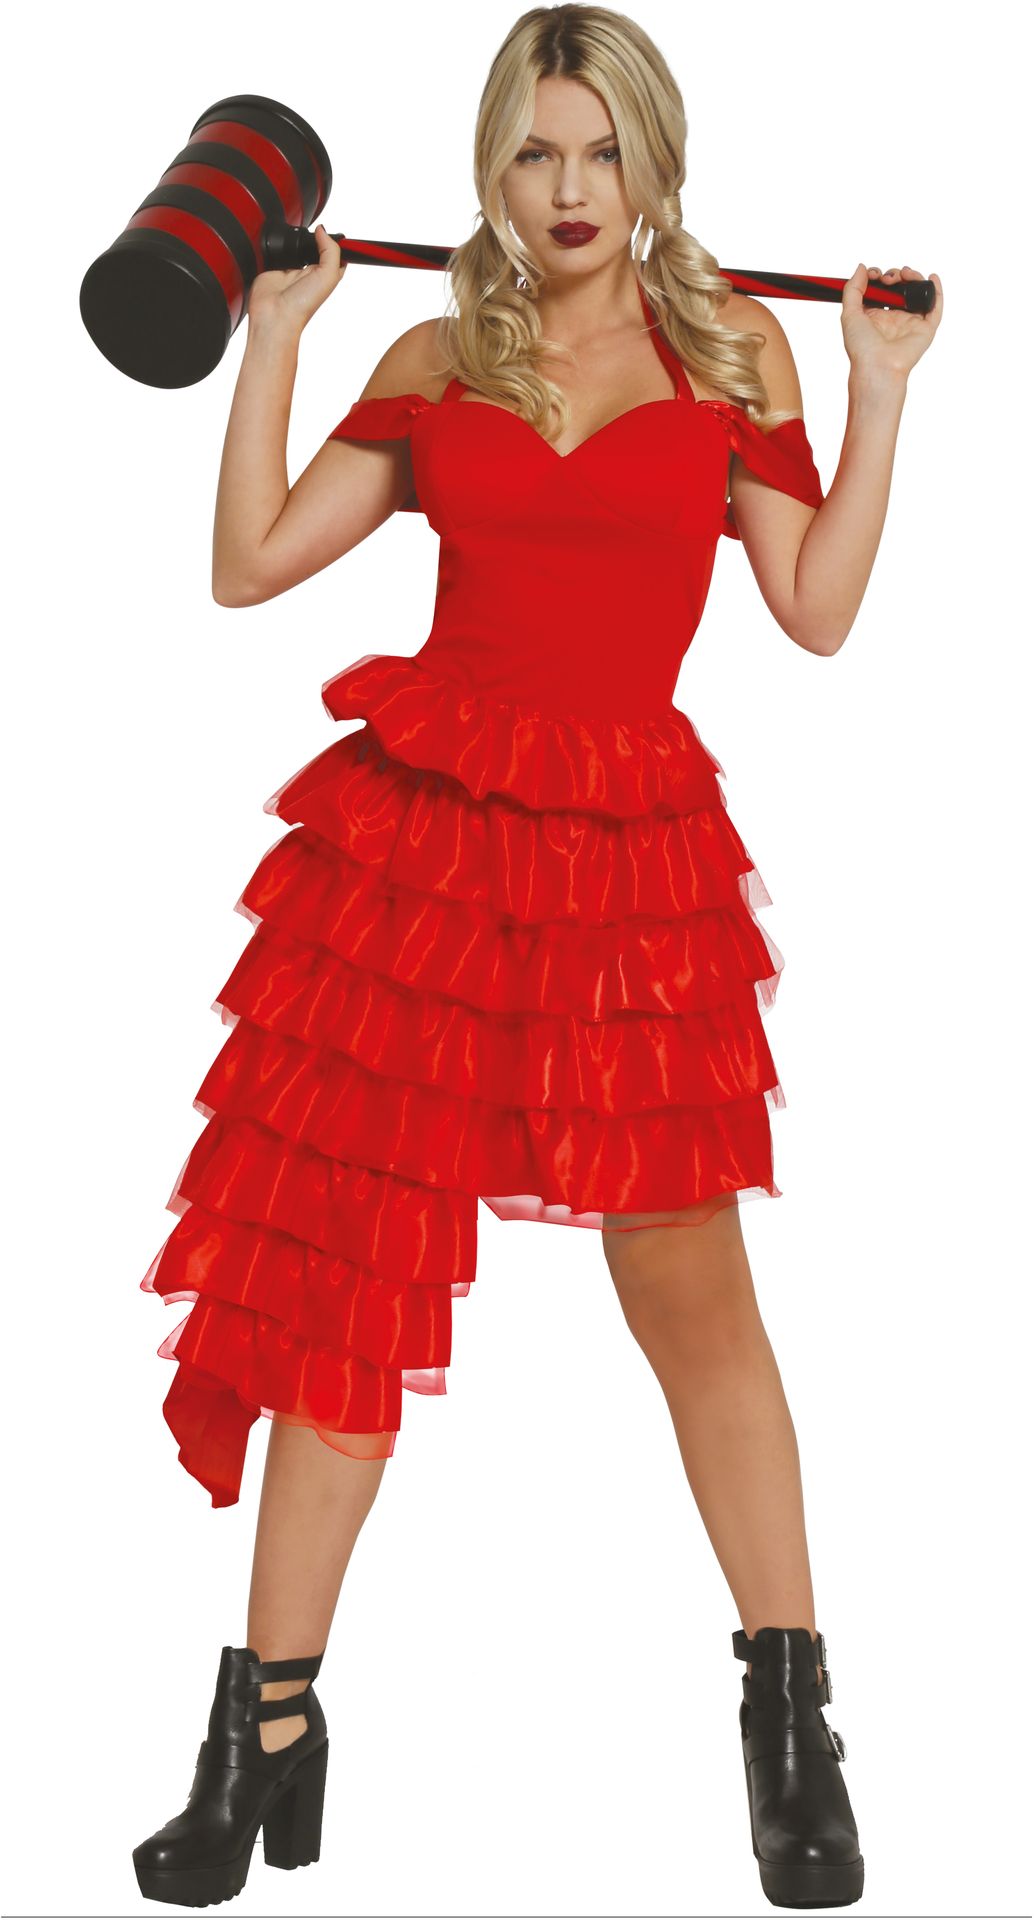 attribuut Kruipen Raadplegen Crazy harley quinn jurk rood vrouw